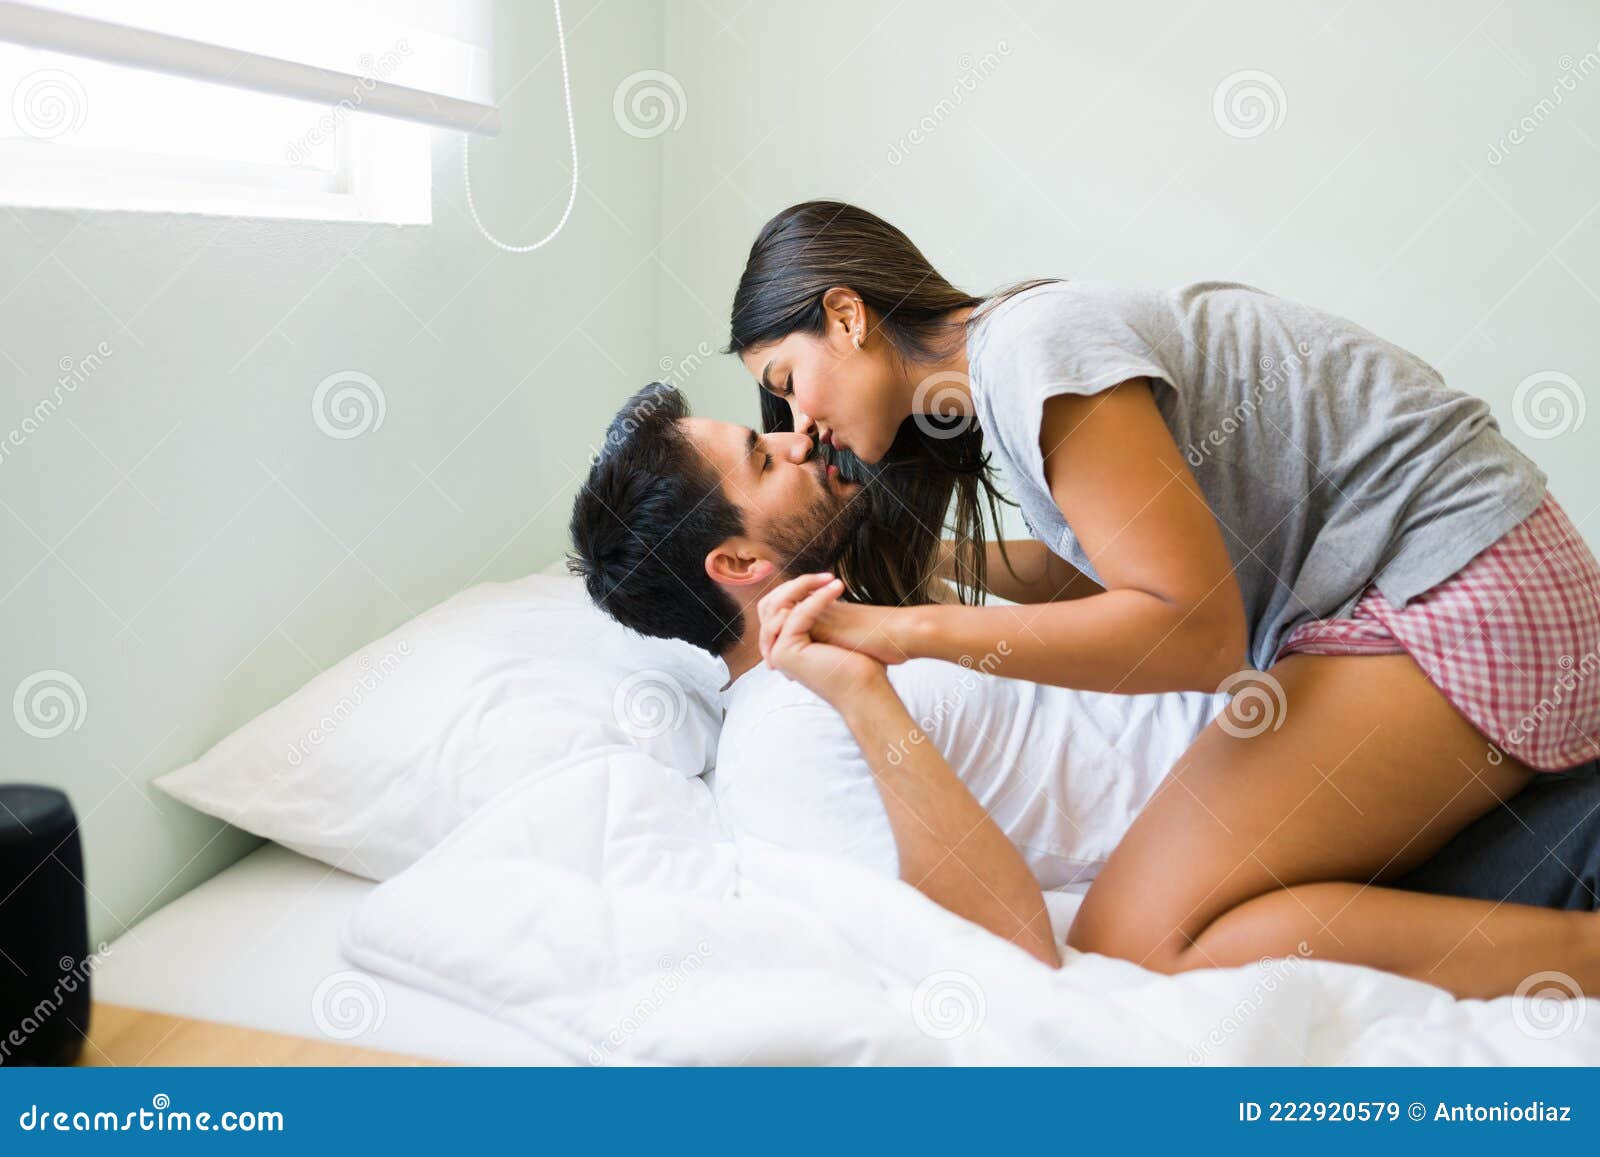 Seductive girlfriend kissing her partner in bed